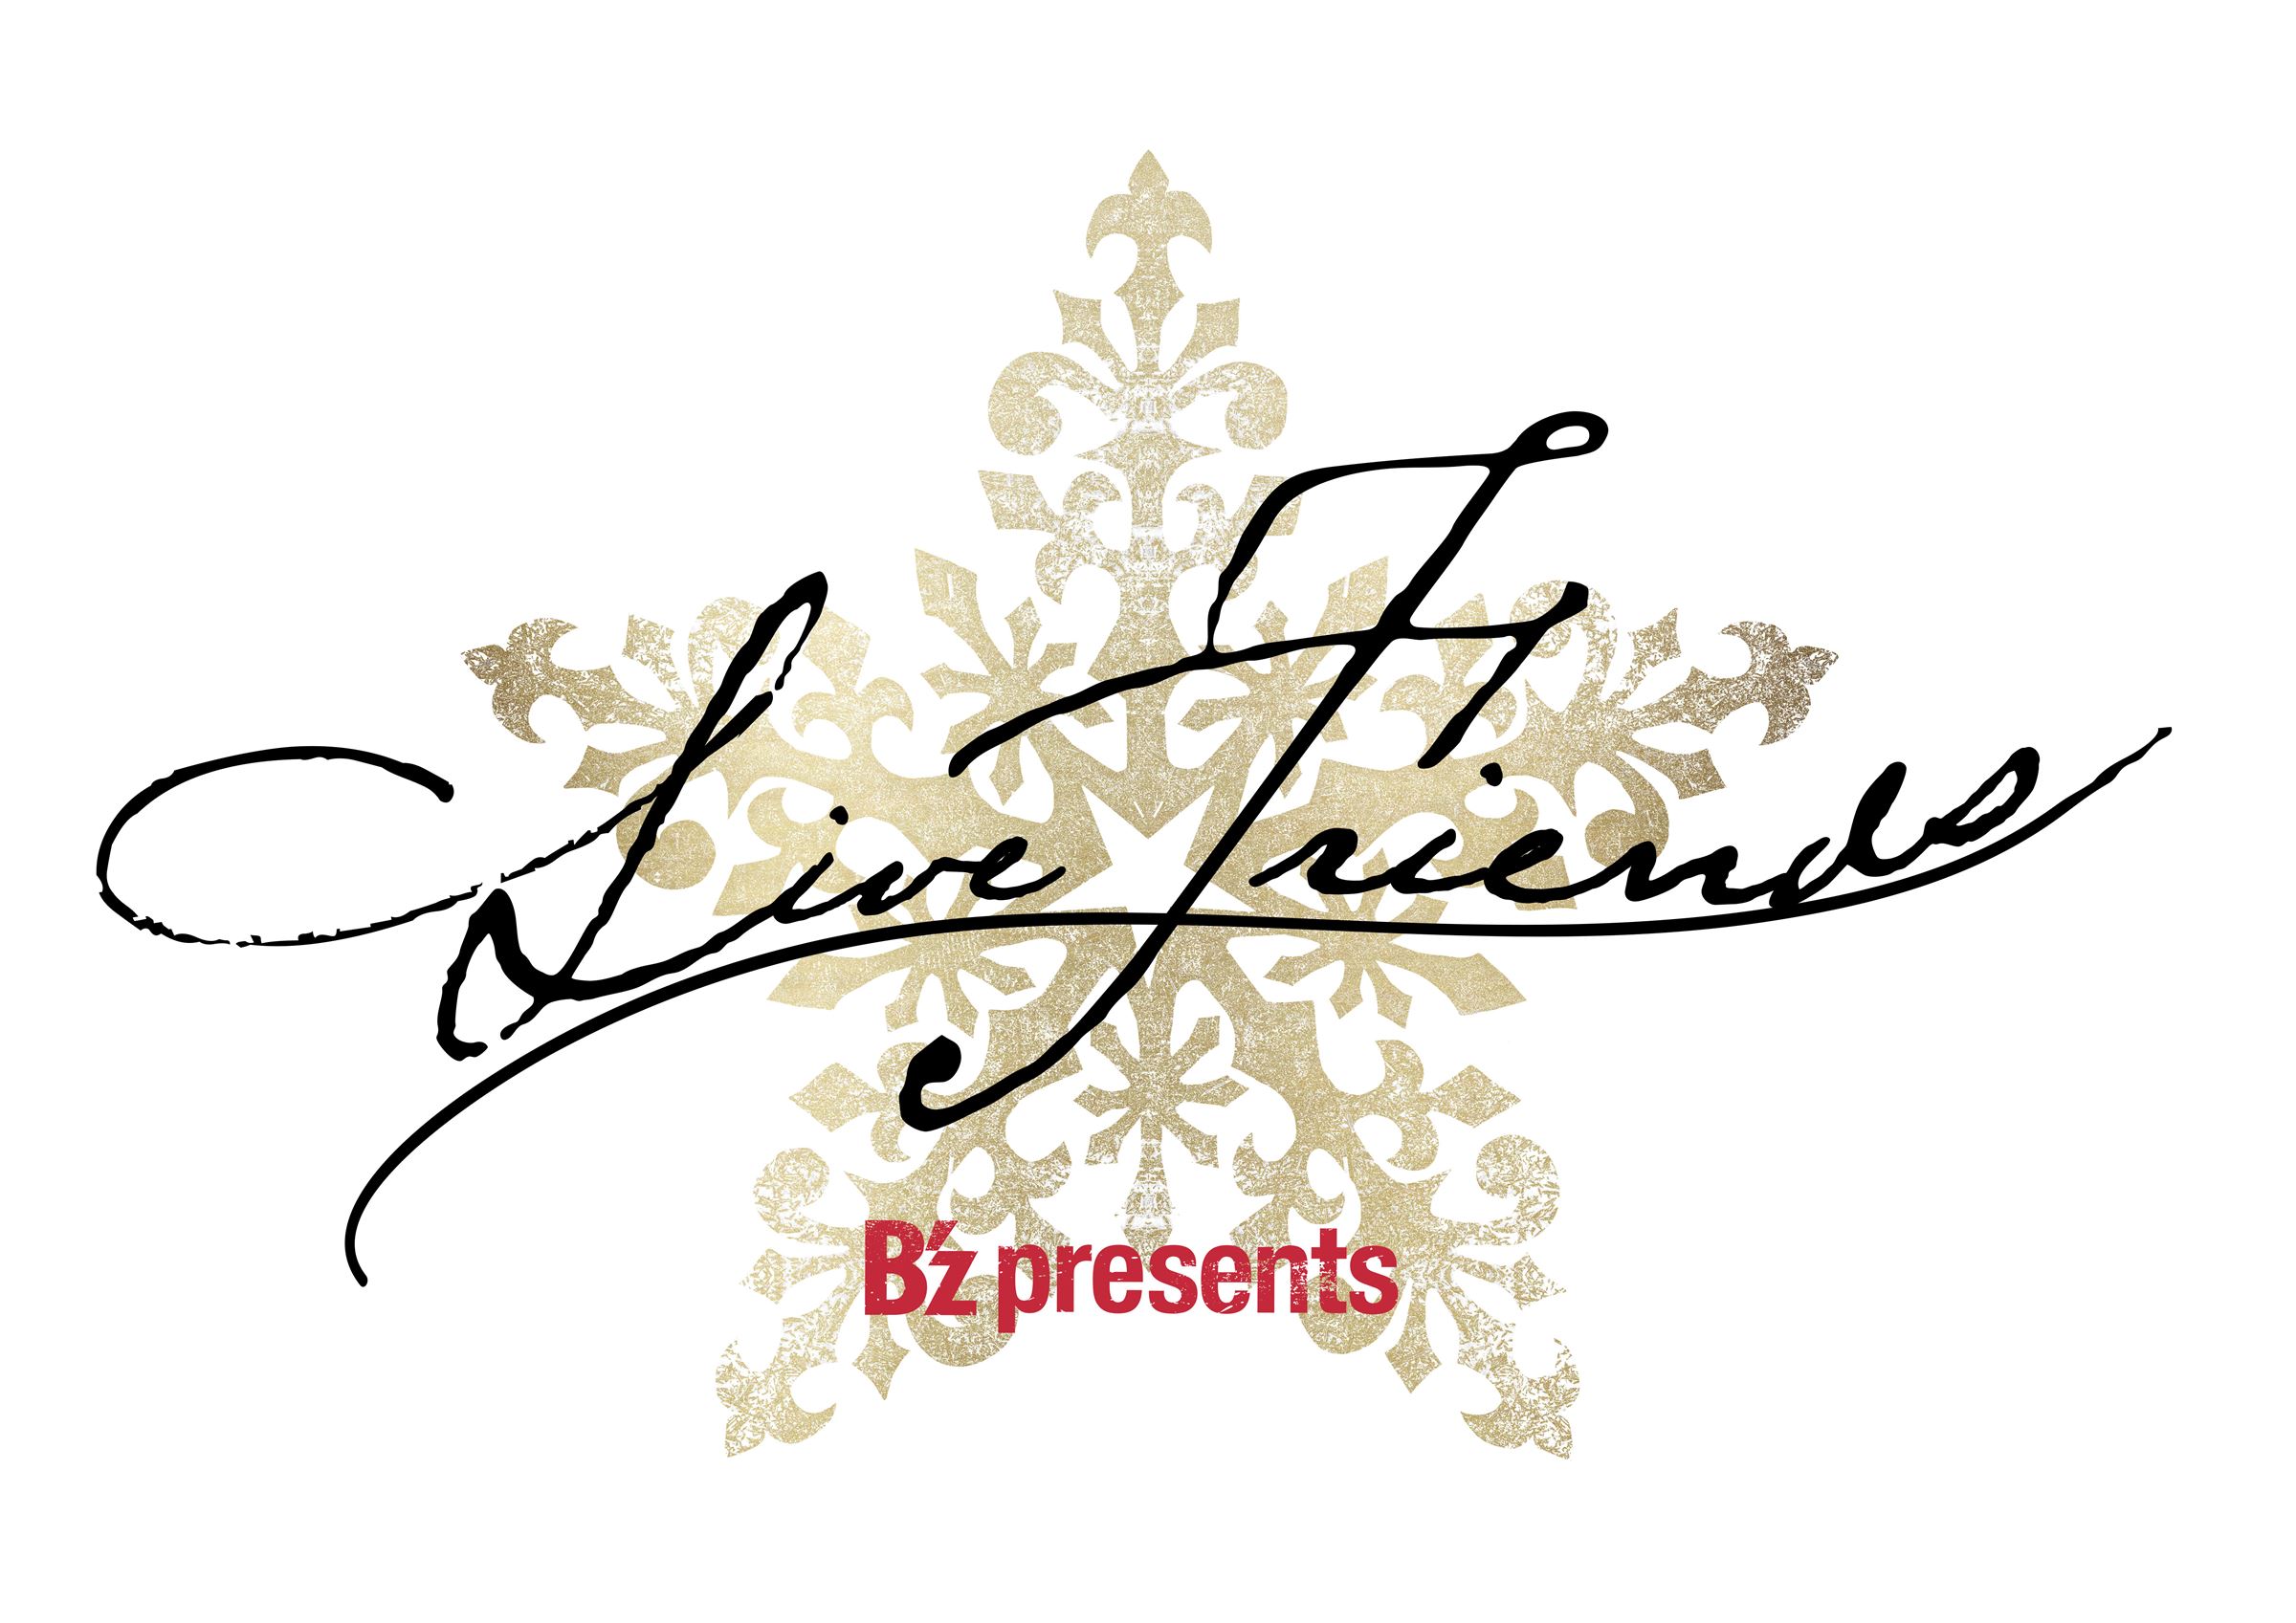 『B’z presents LIVE FRIENDS』ロゴ